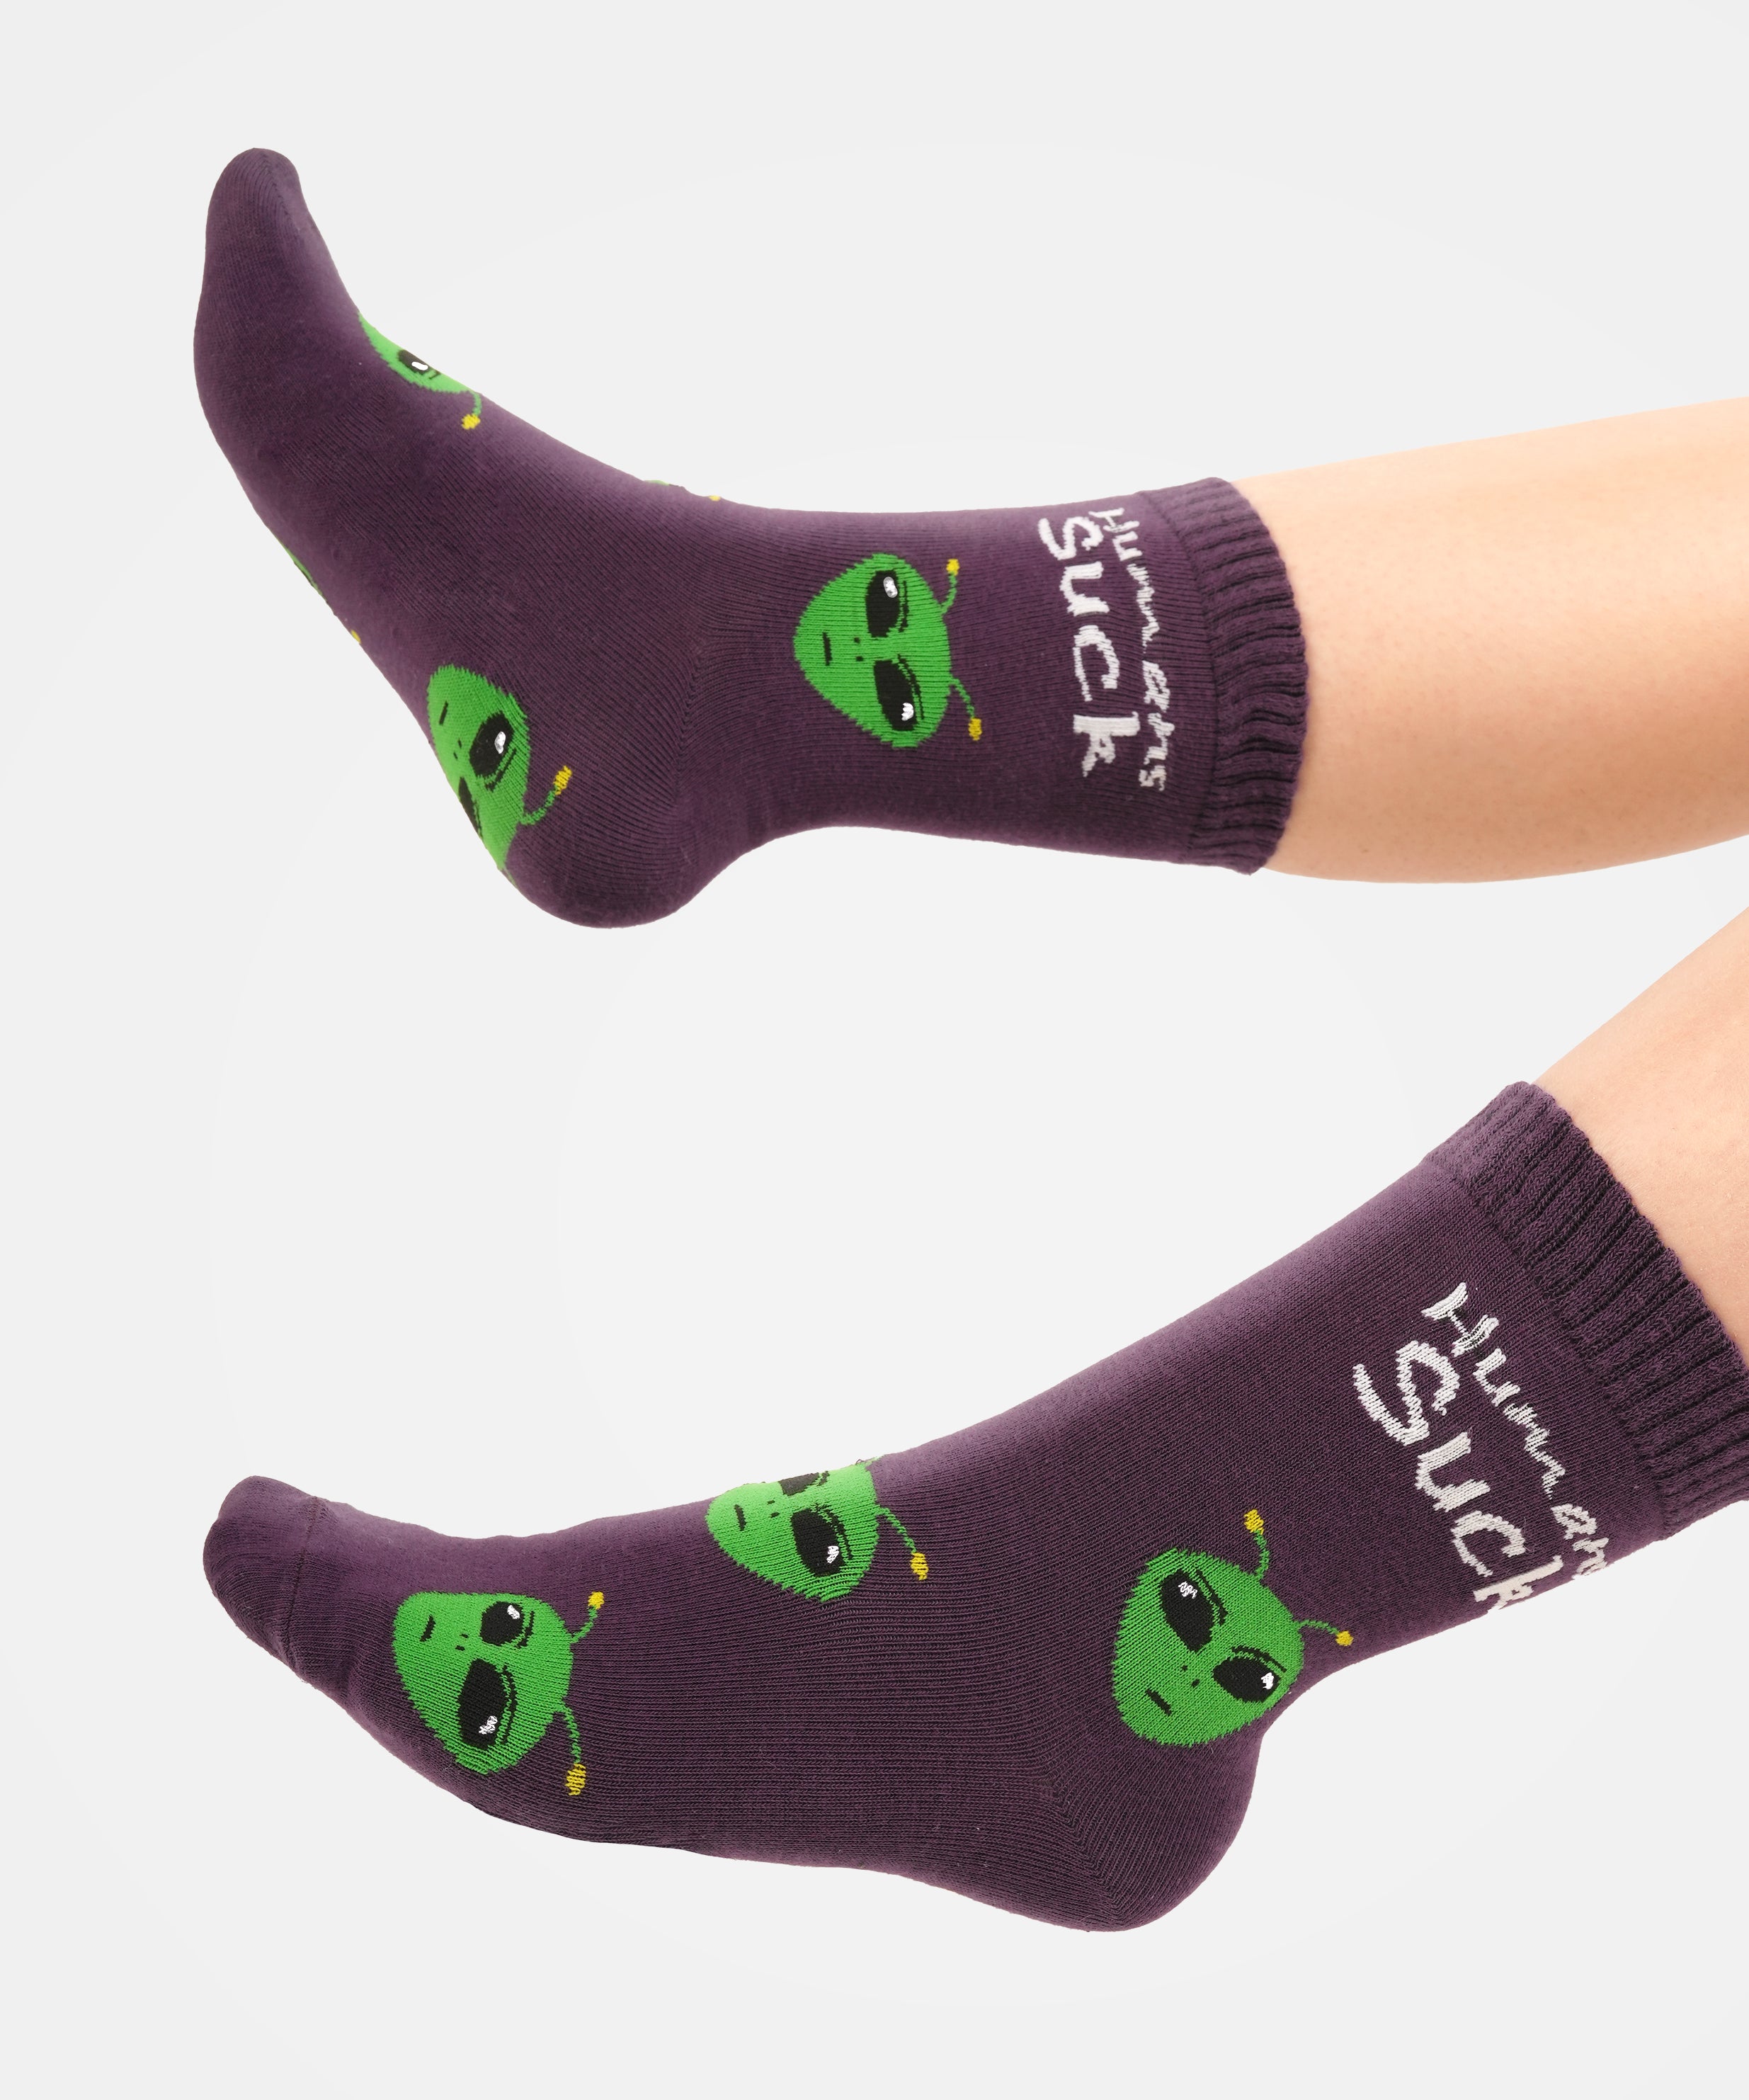 Humans Suck Socks